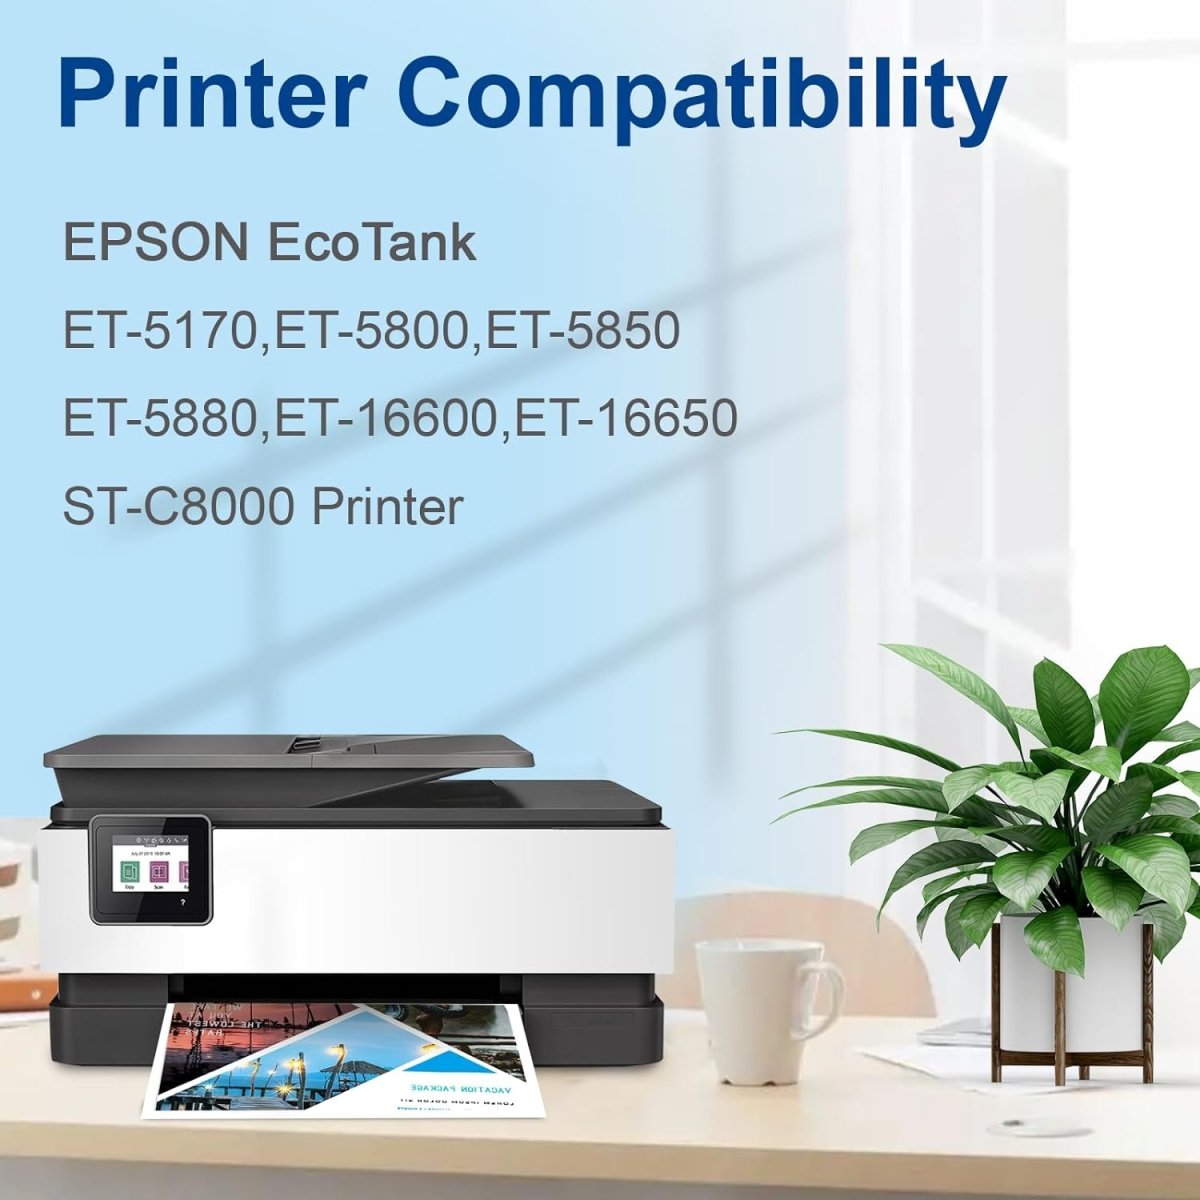 Compatible Epson 542 Ink Bottle, 1 Black, 1 Cyan, 1 Magenta, 1 Yellow - 4-Pack - Linford Office:Printer Ink & Toner Cartridge